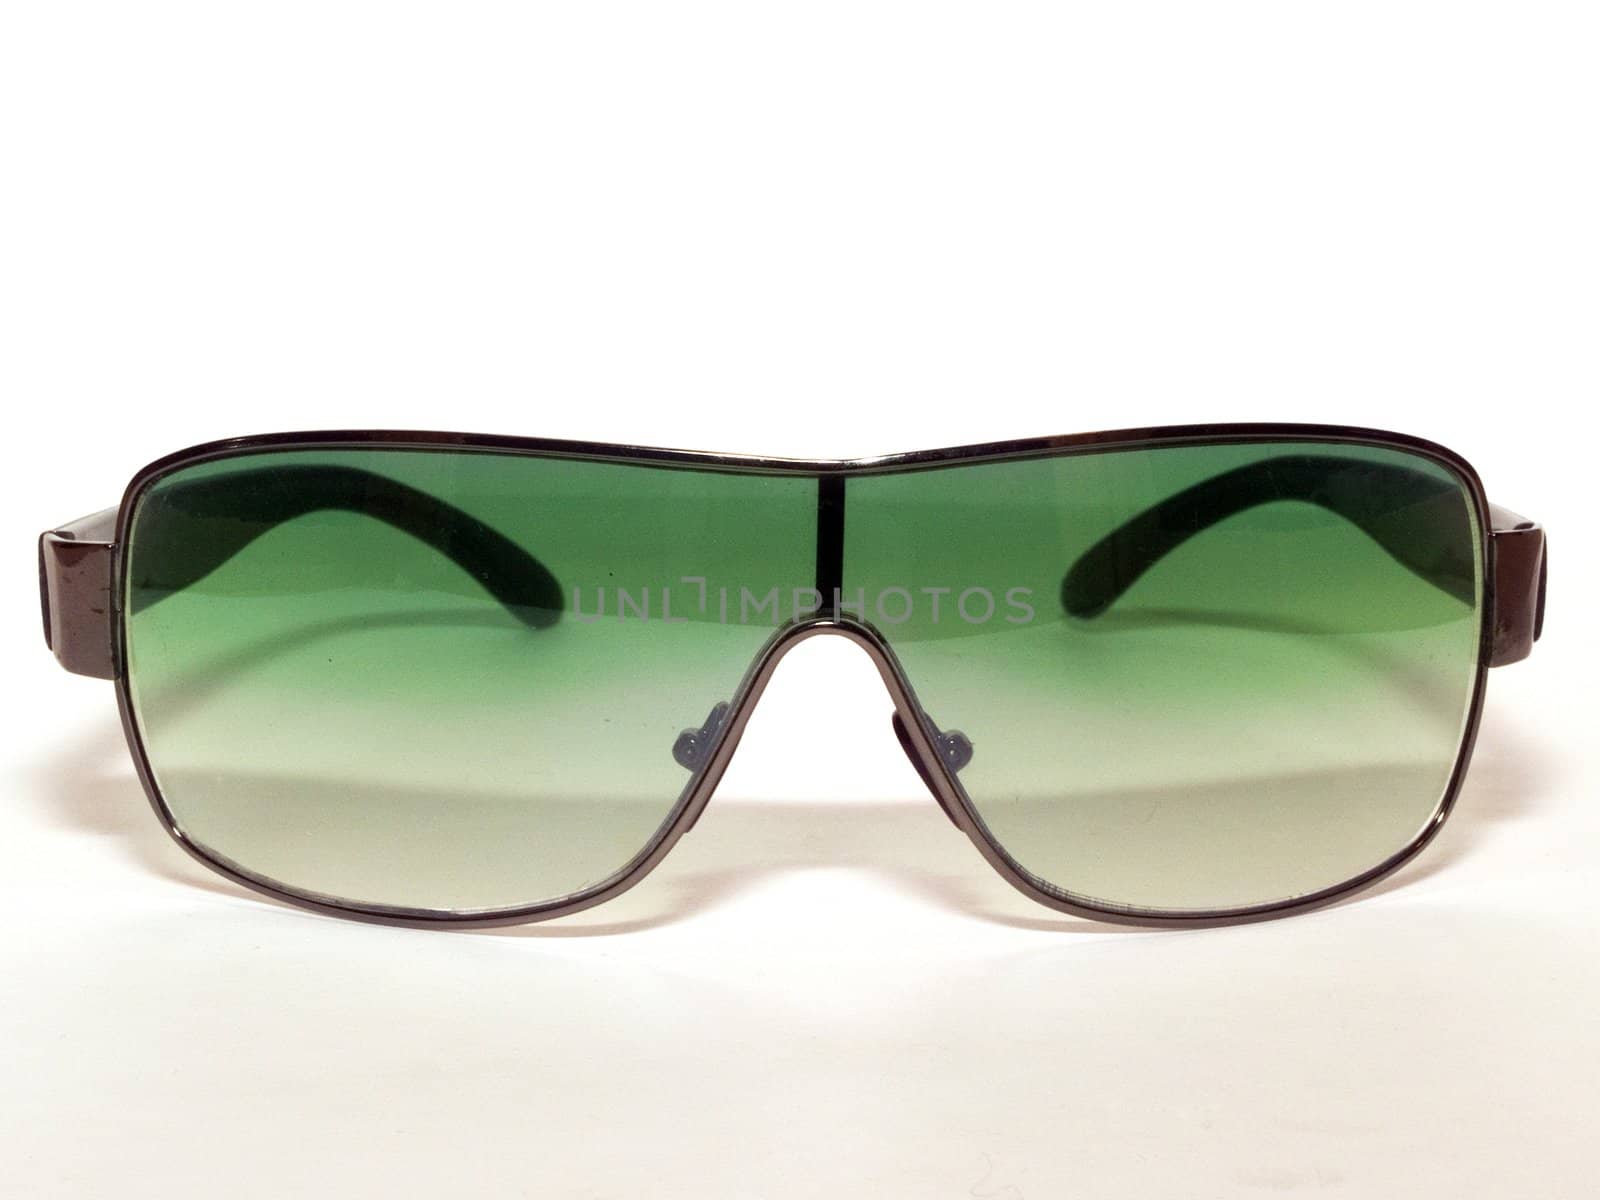 Green sport sunglasses